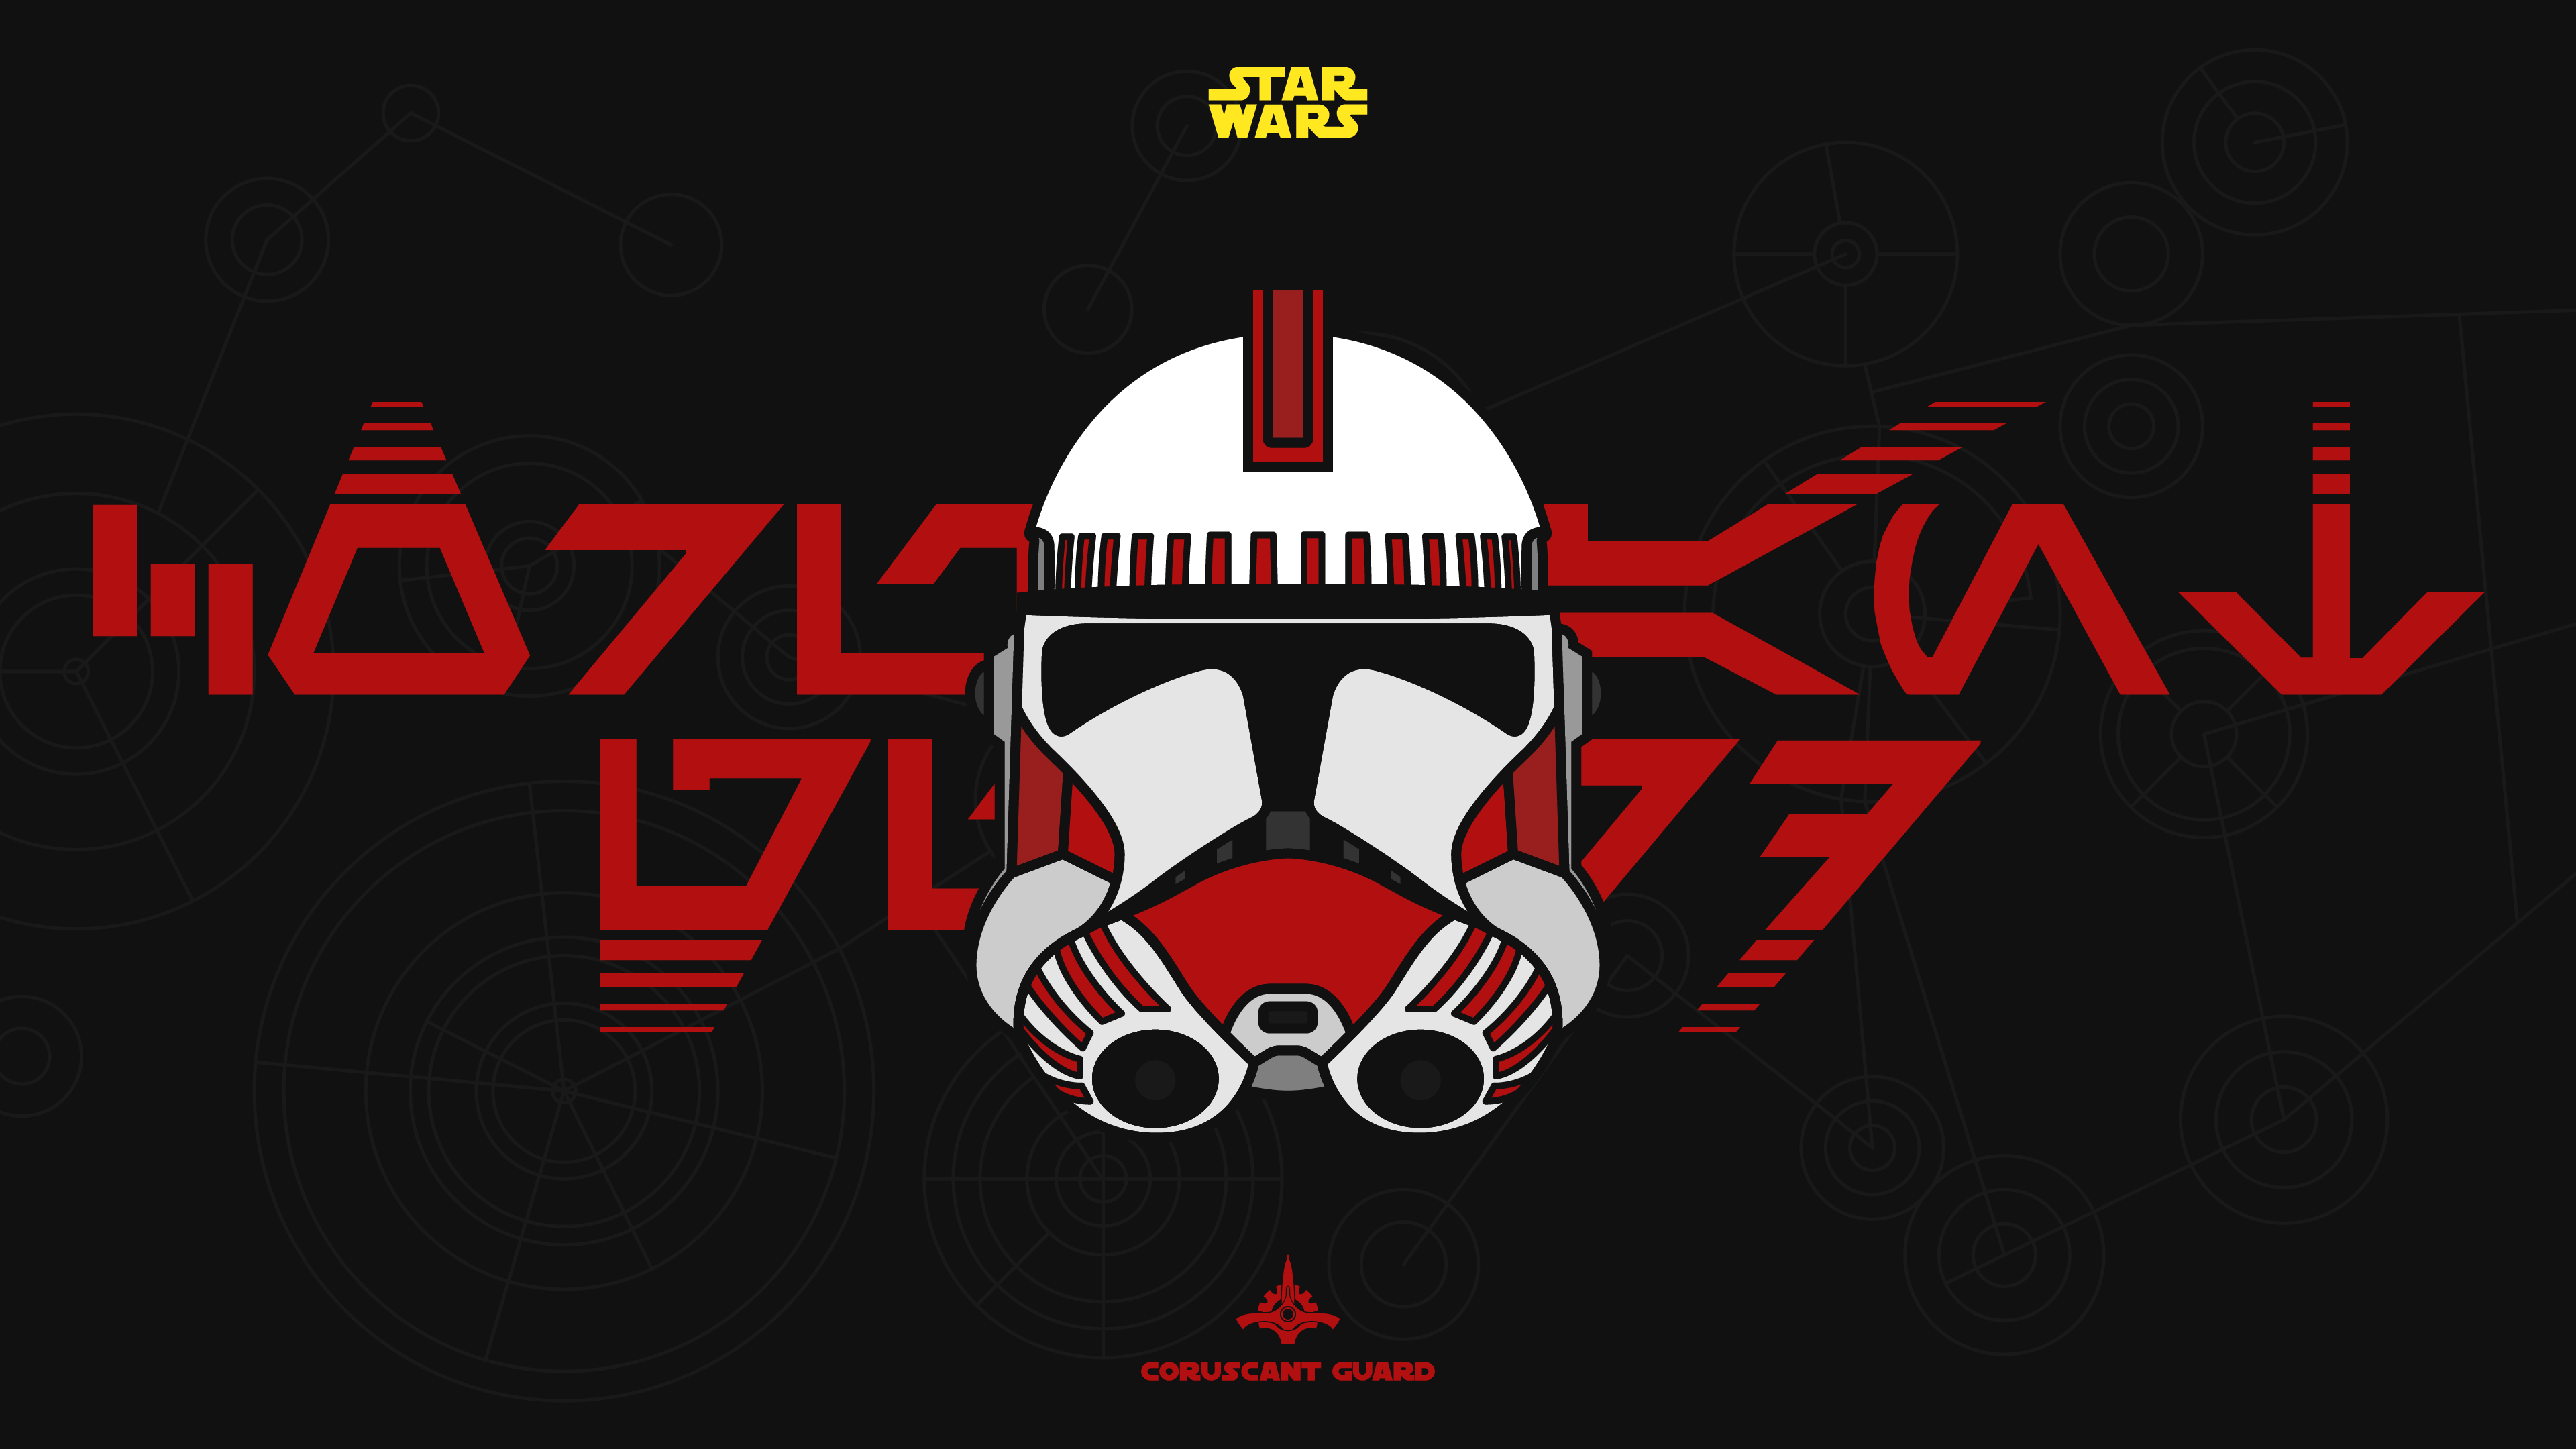 Star Wars Coruscant Guard trooper [3840x2160]